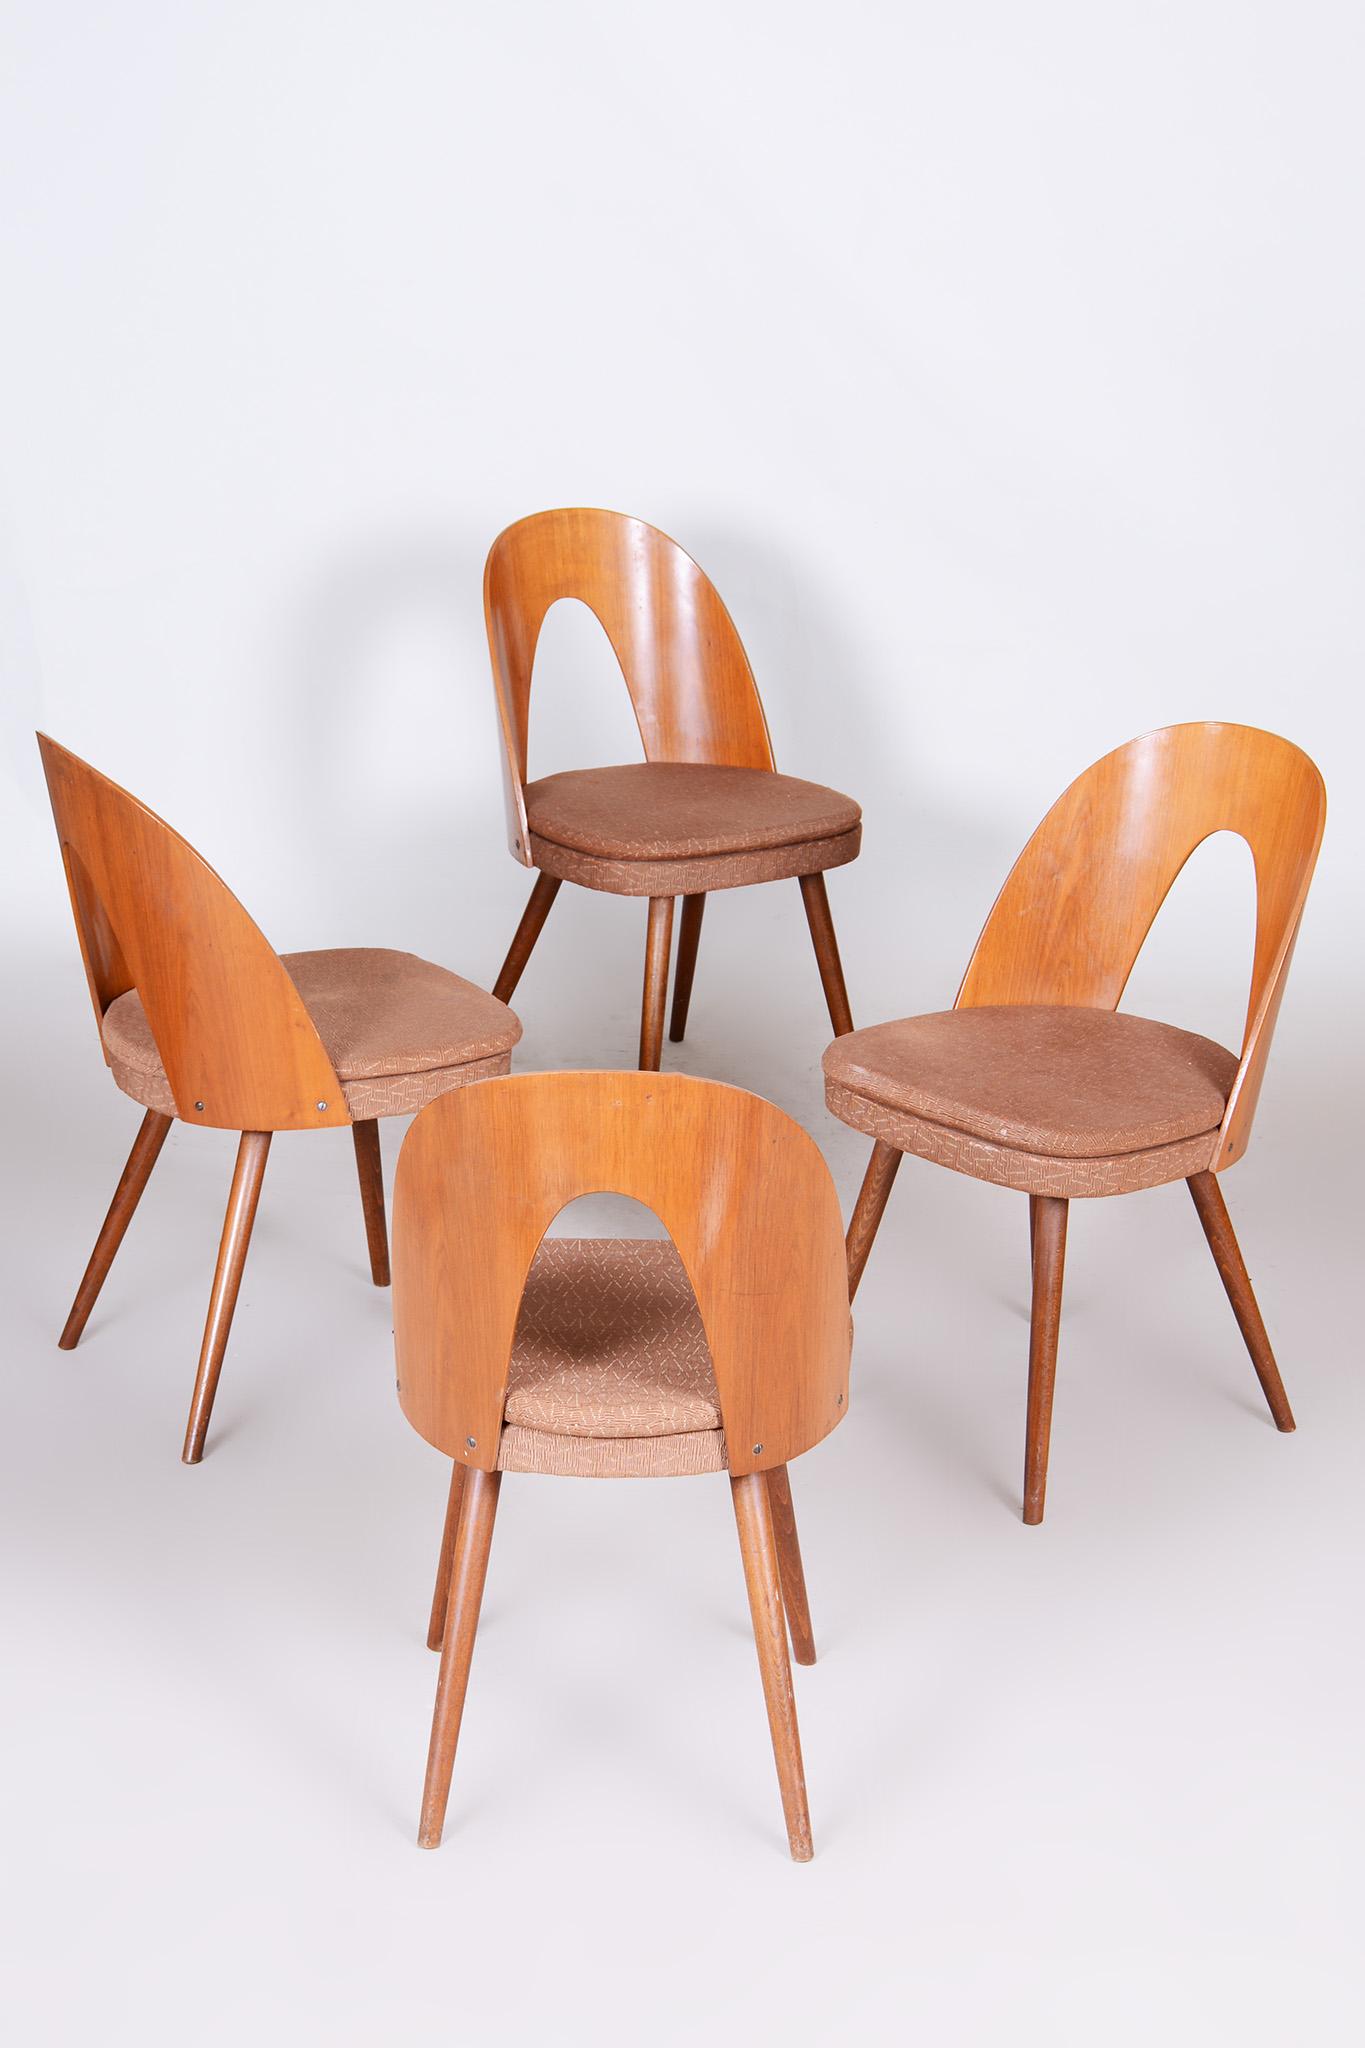 Set of Four Mid-Century Modern Chairs Made in 1950s Czechia by Antonín Šuman For Sale 6